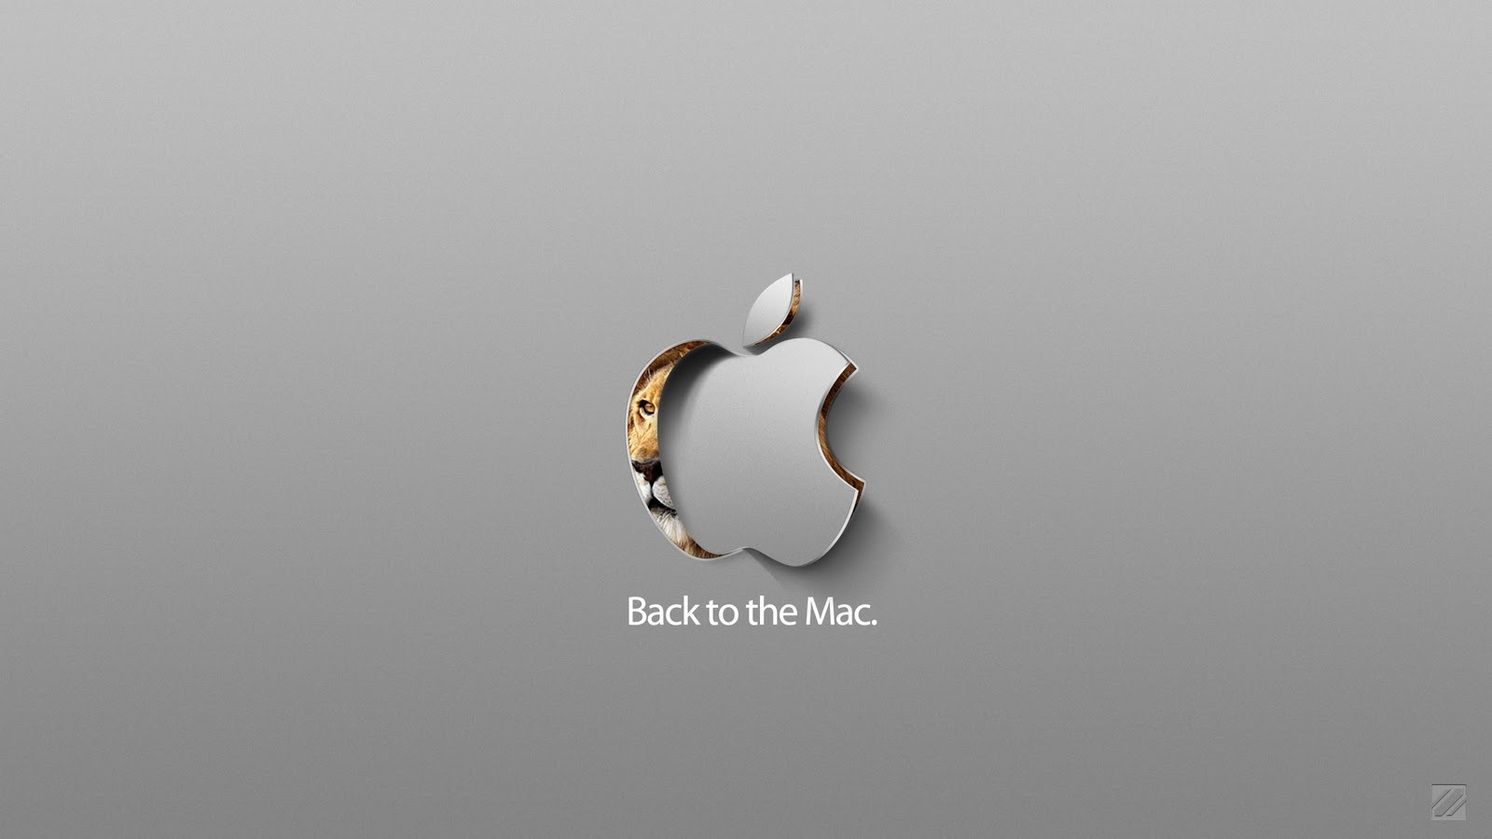 Cool iMac Backgrounds